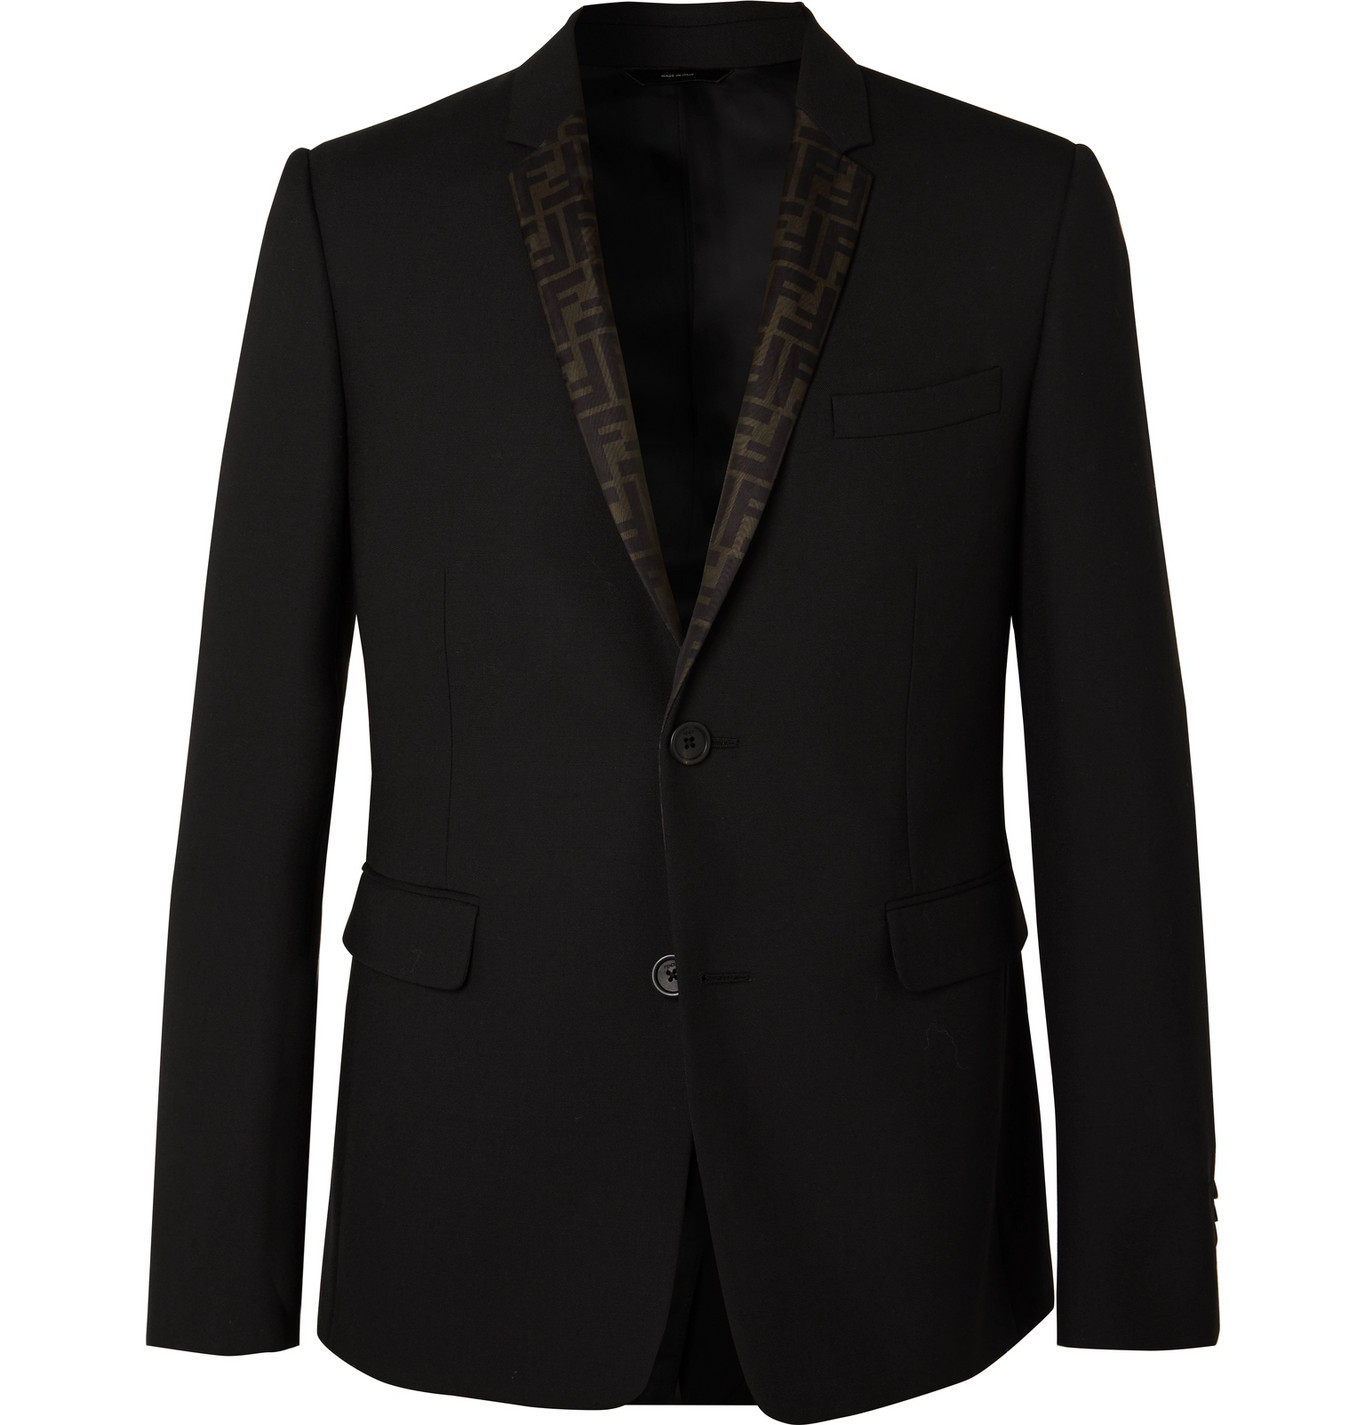 Fendi - Black Slim-Fit Woven Suit Jacket - Men - Black | The Fashionisto